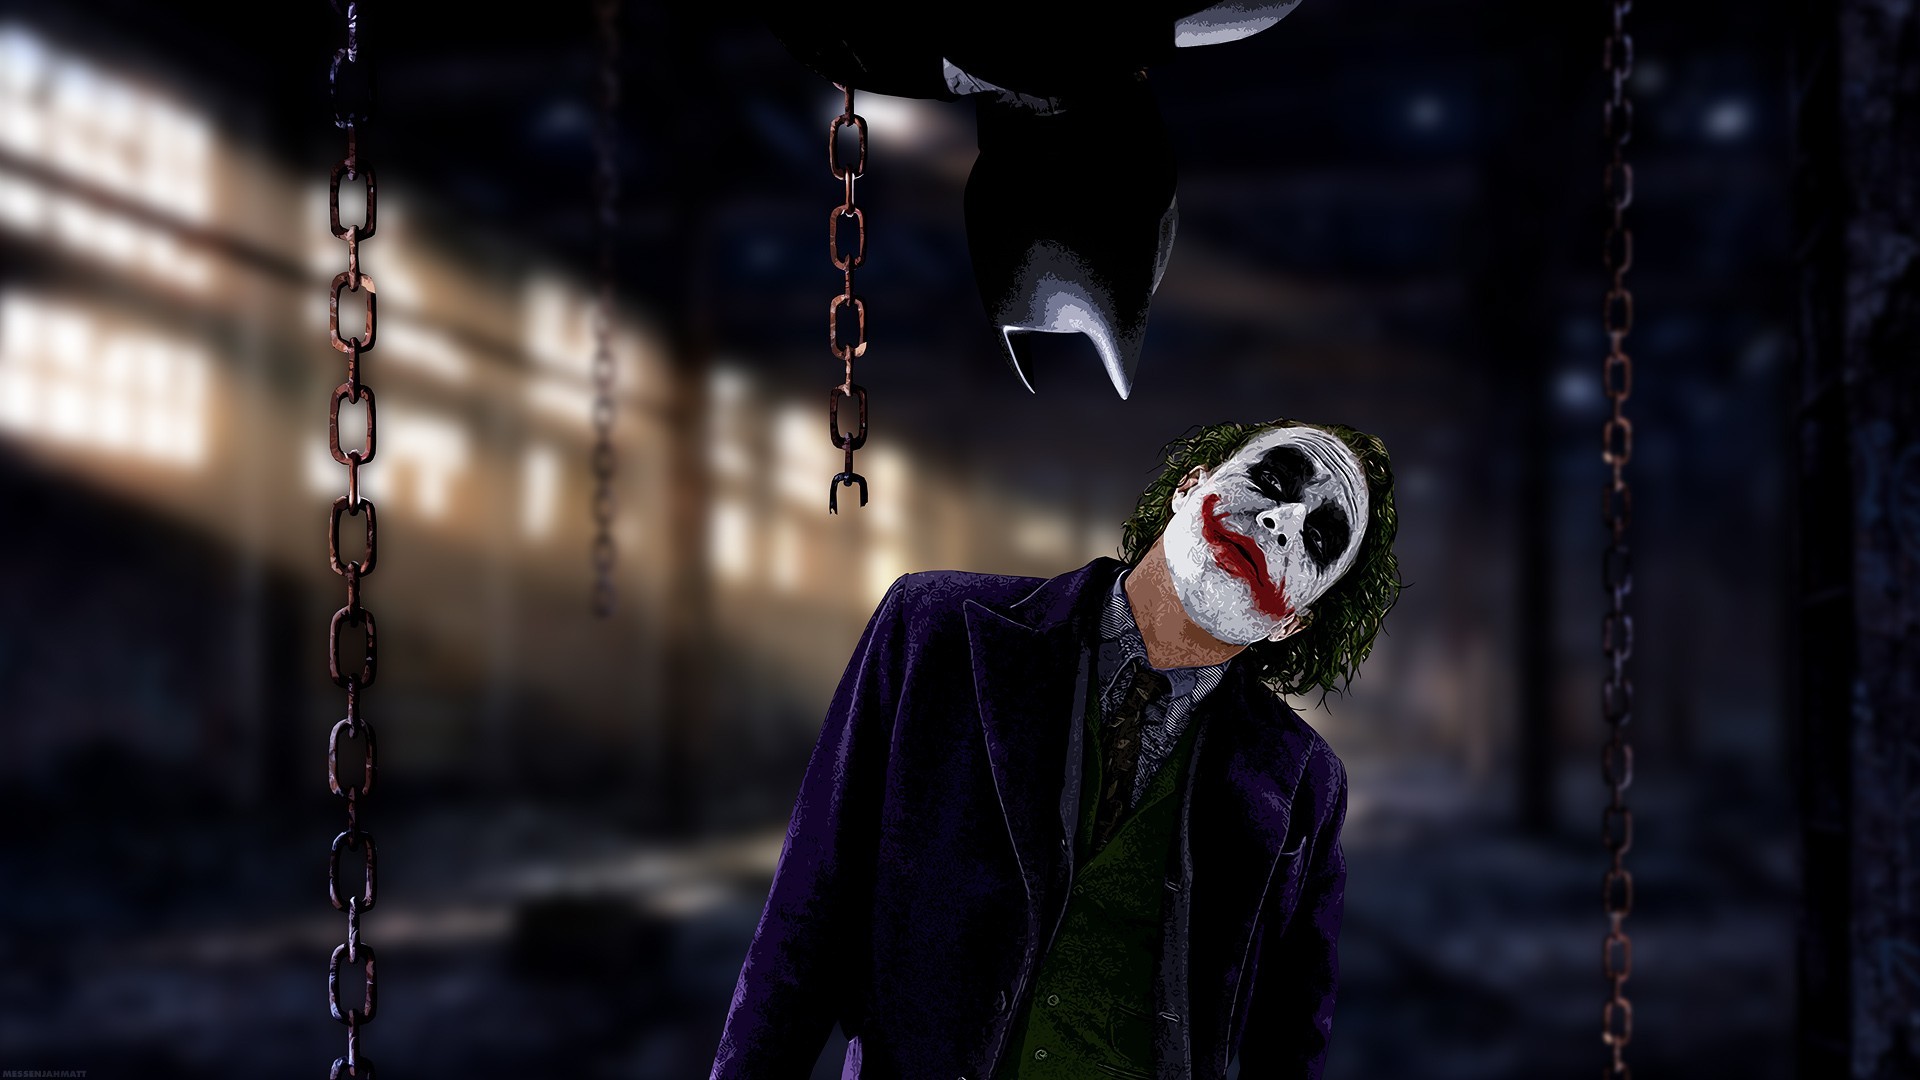 General 1920x1080 Batman chains Joker The Dark Knight MessenjahMatt movies Heath Ledger actor deceased Australian villains DC Comics Warner Brothers Christopher Nolan